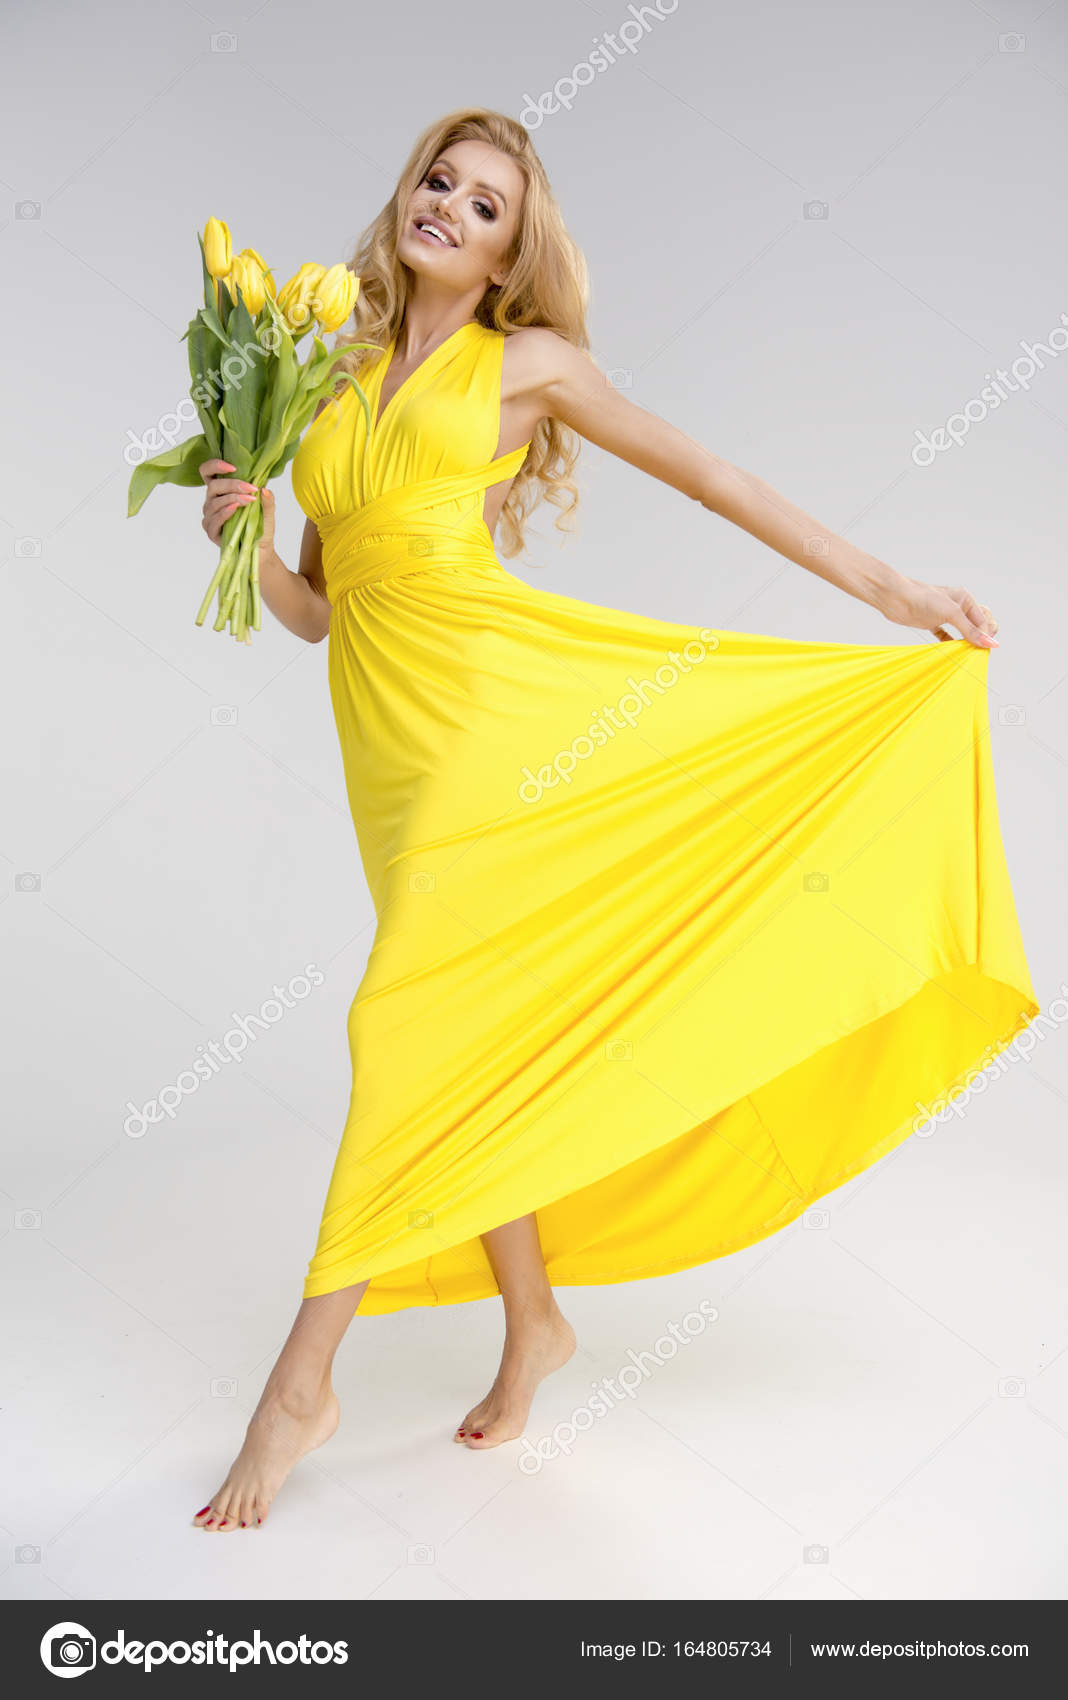 Blonde Girl In Yellow Dress Stock Photo C Path21 164805734